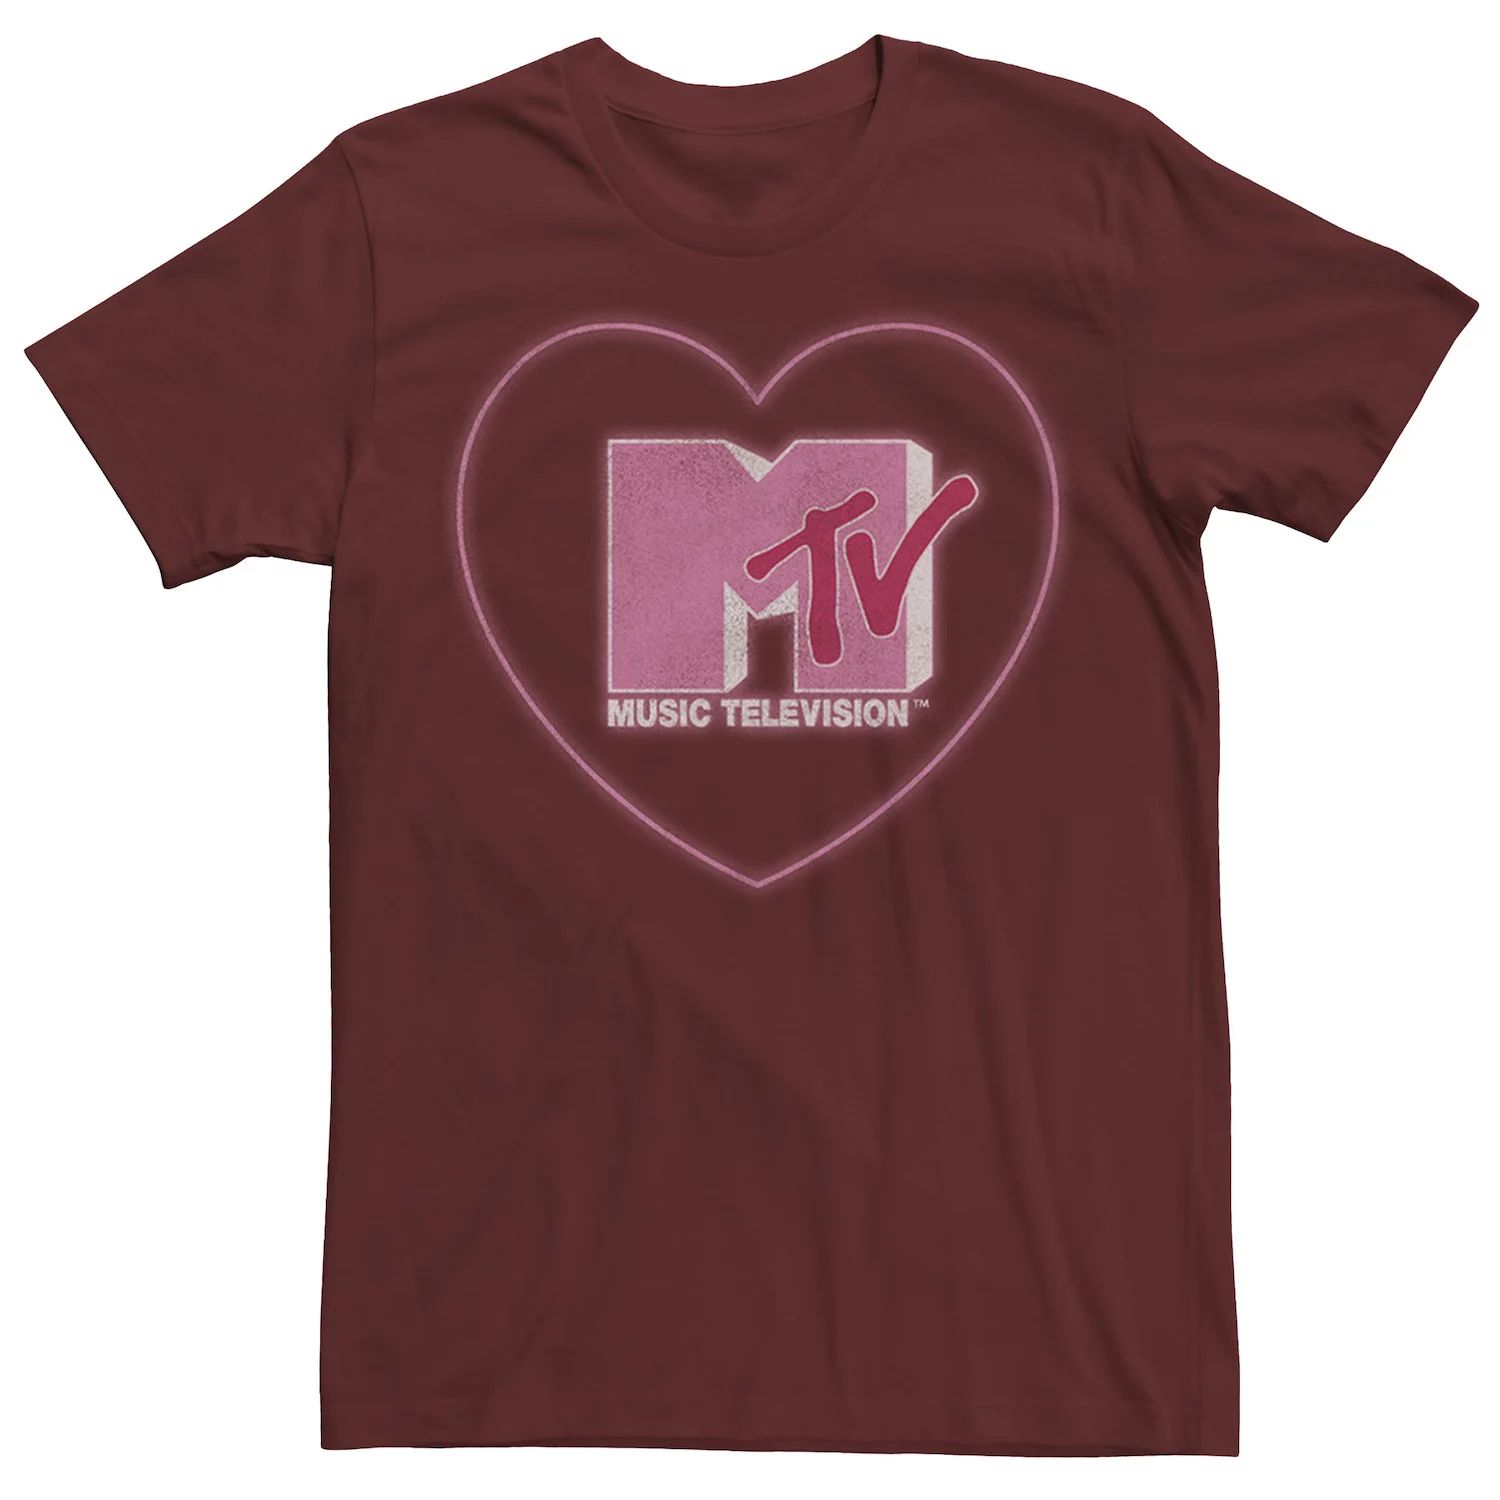 Мужская футболка с логотипом MTV розового цвета в форме сердца Licensed Character